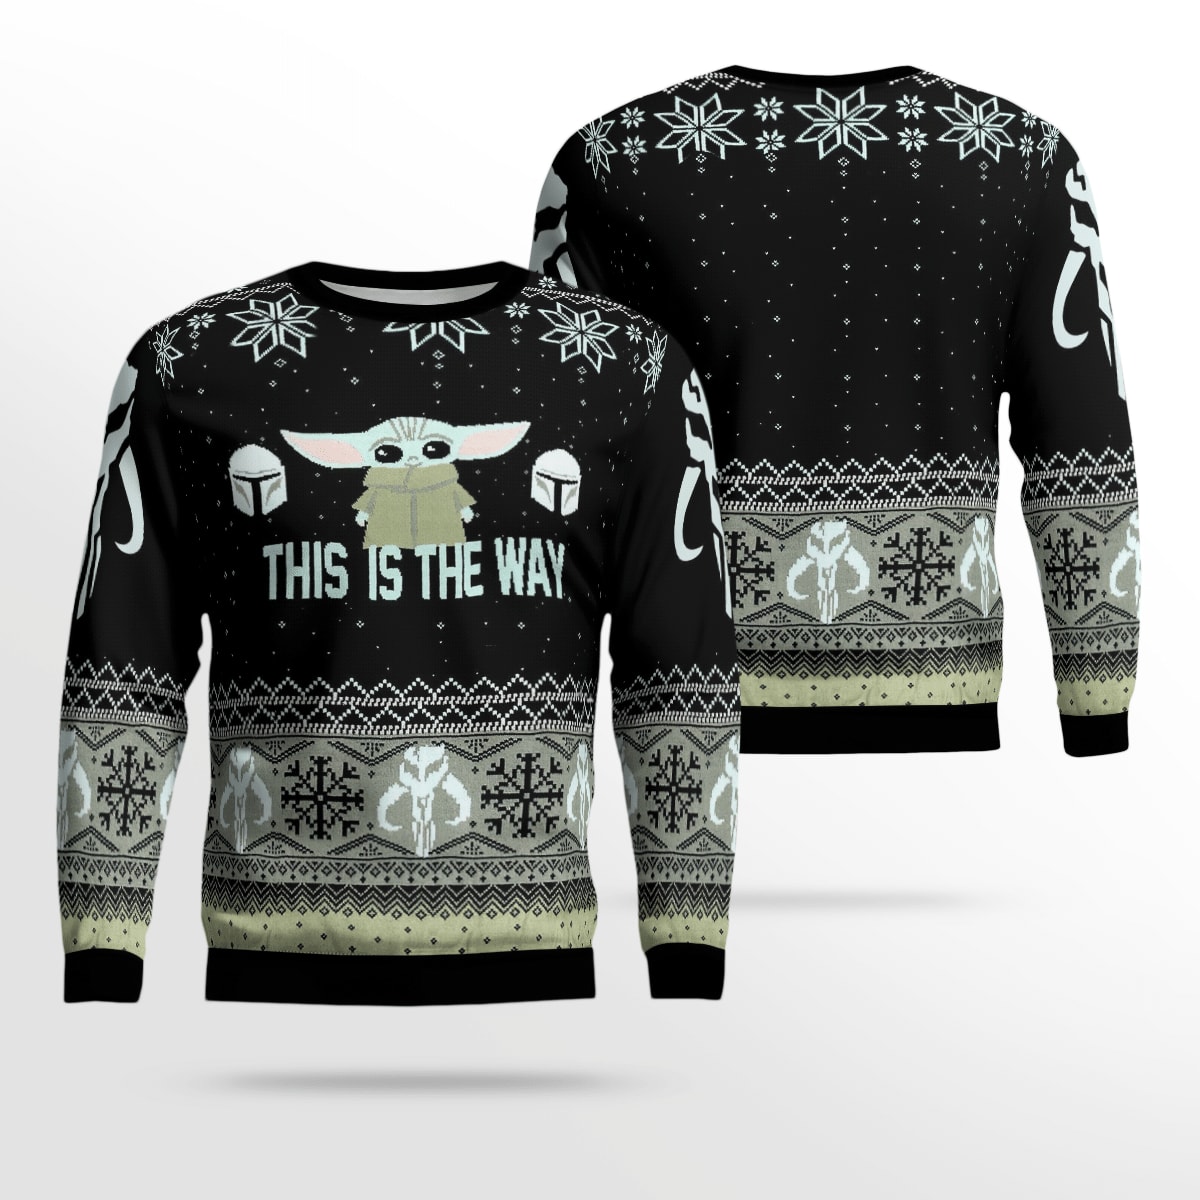 This Is Way Christmas Sweater Jmpbud